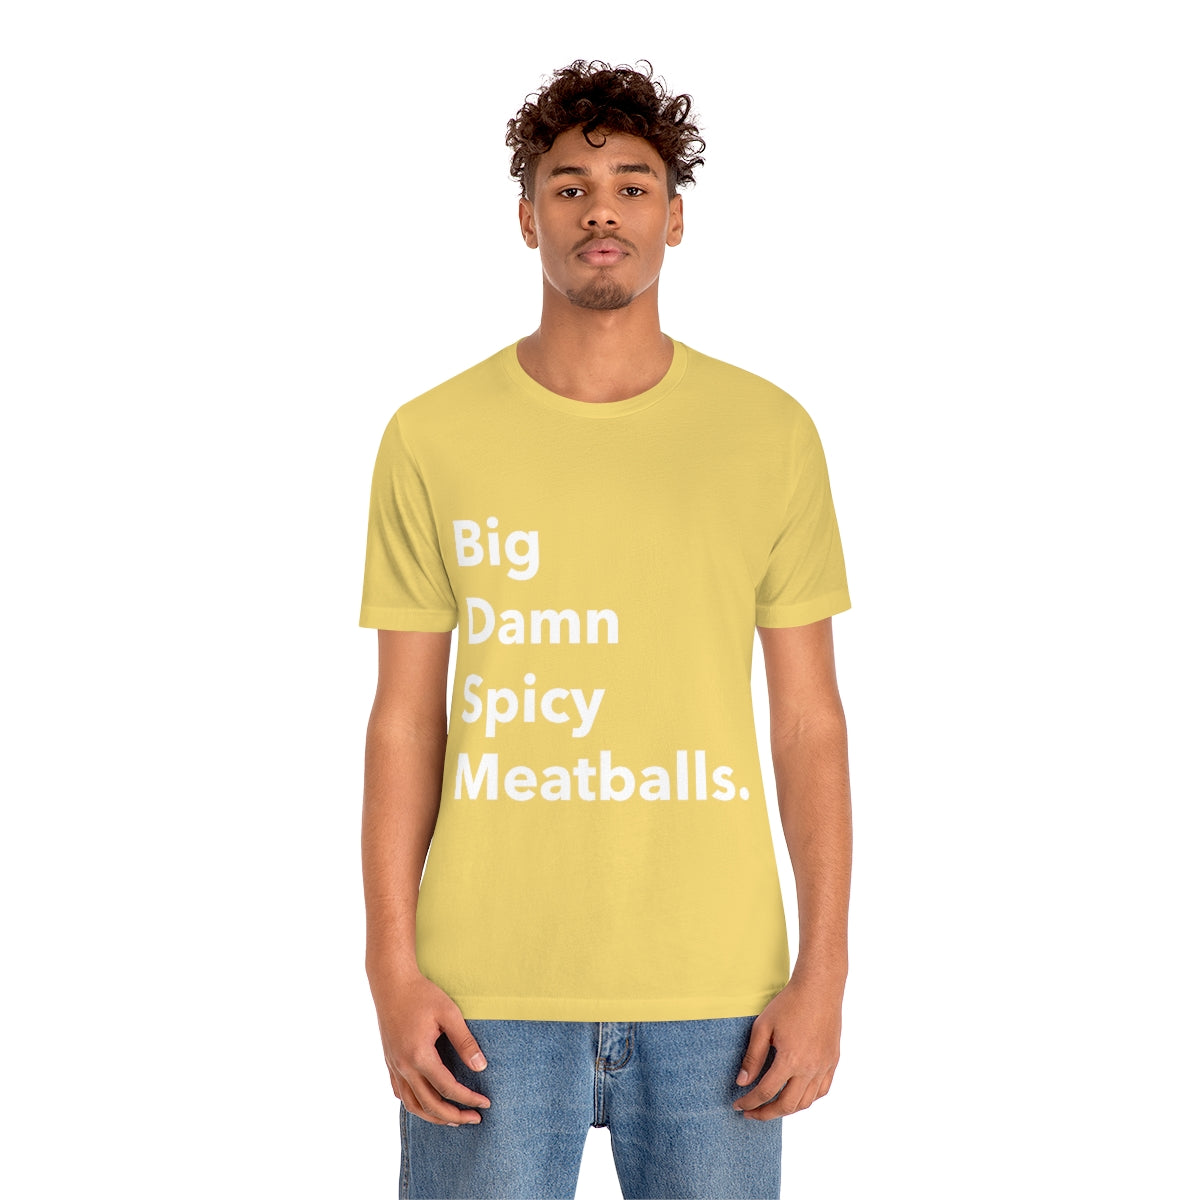 Big Damn Spicy Meatballs - Unisex T-Shirt